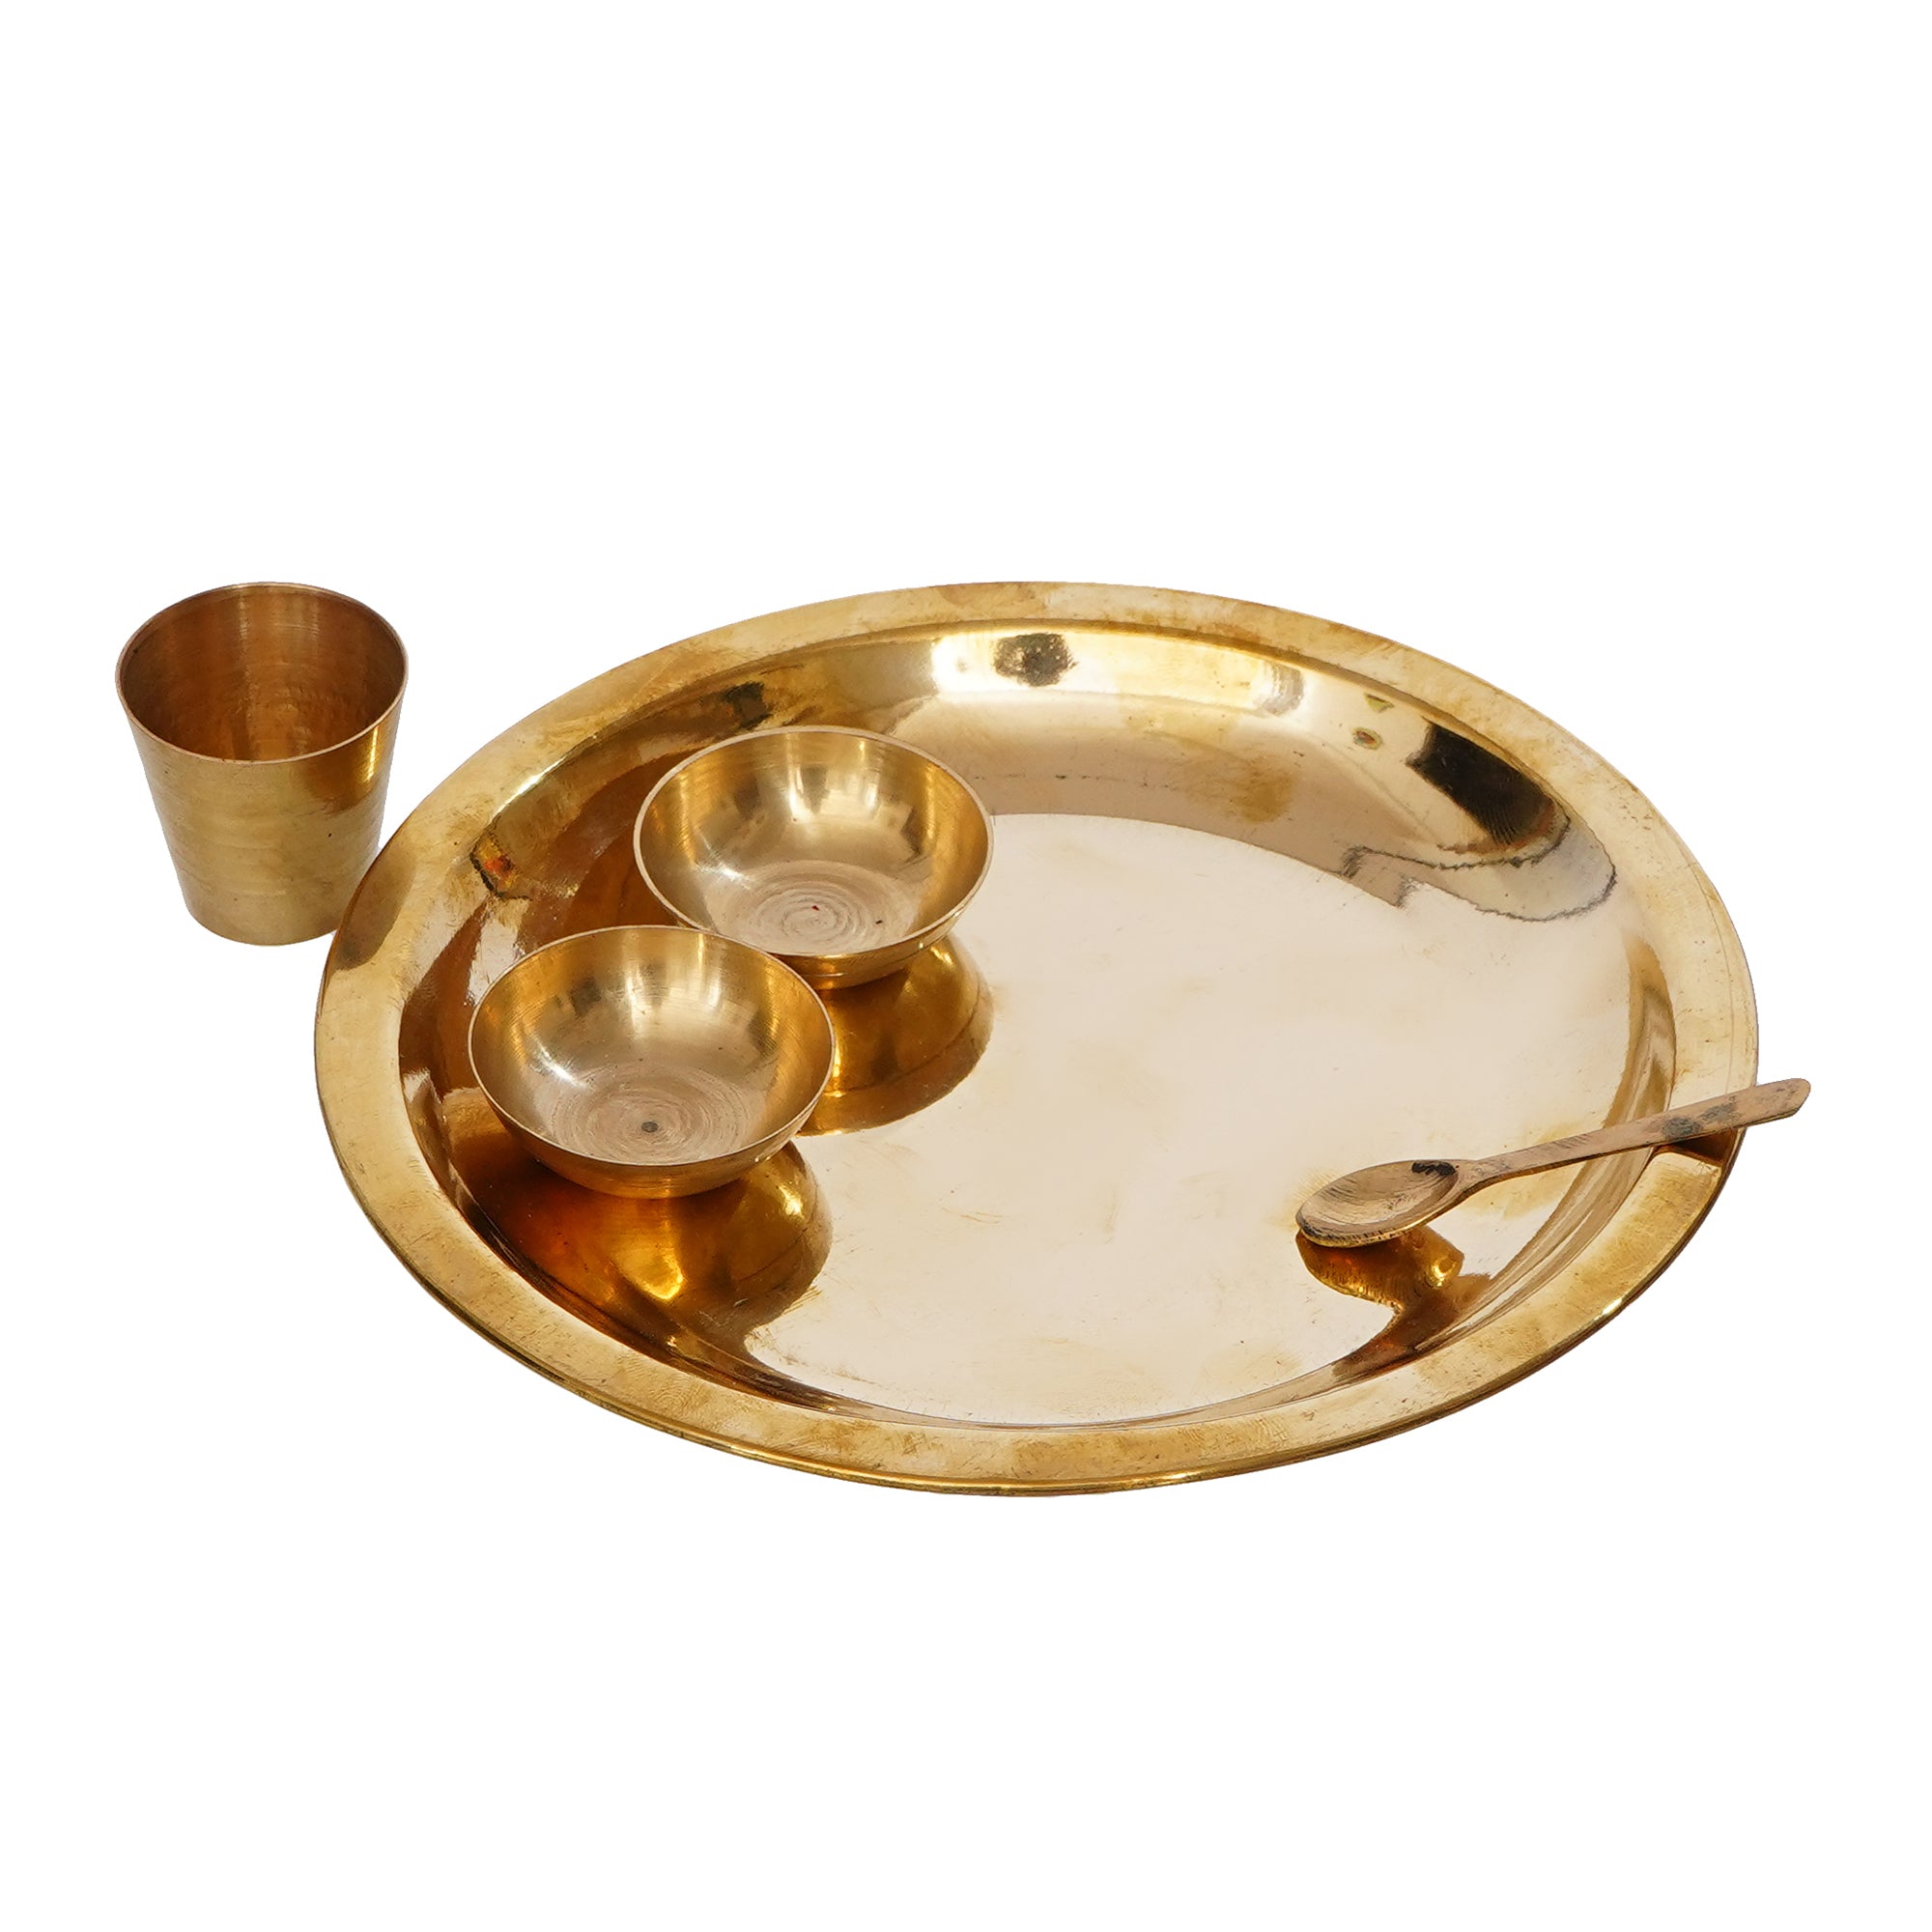 7 Inch Brass Pooja Thali with 2 Katori/Bowls, 1 Spoon and 1 Glass 2